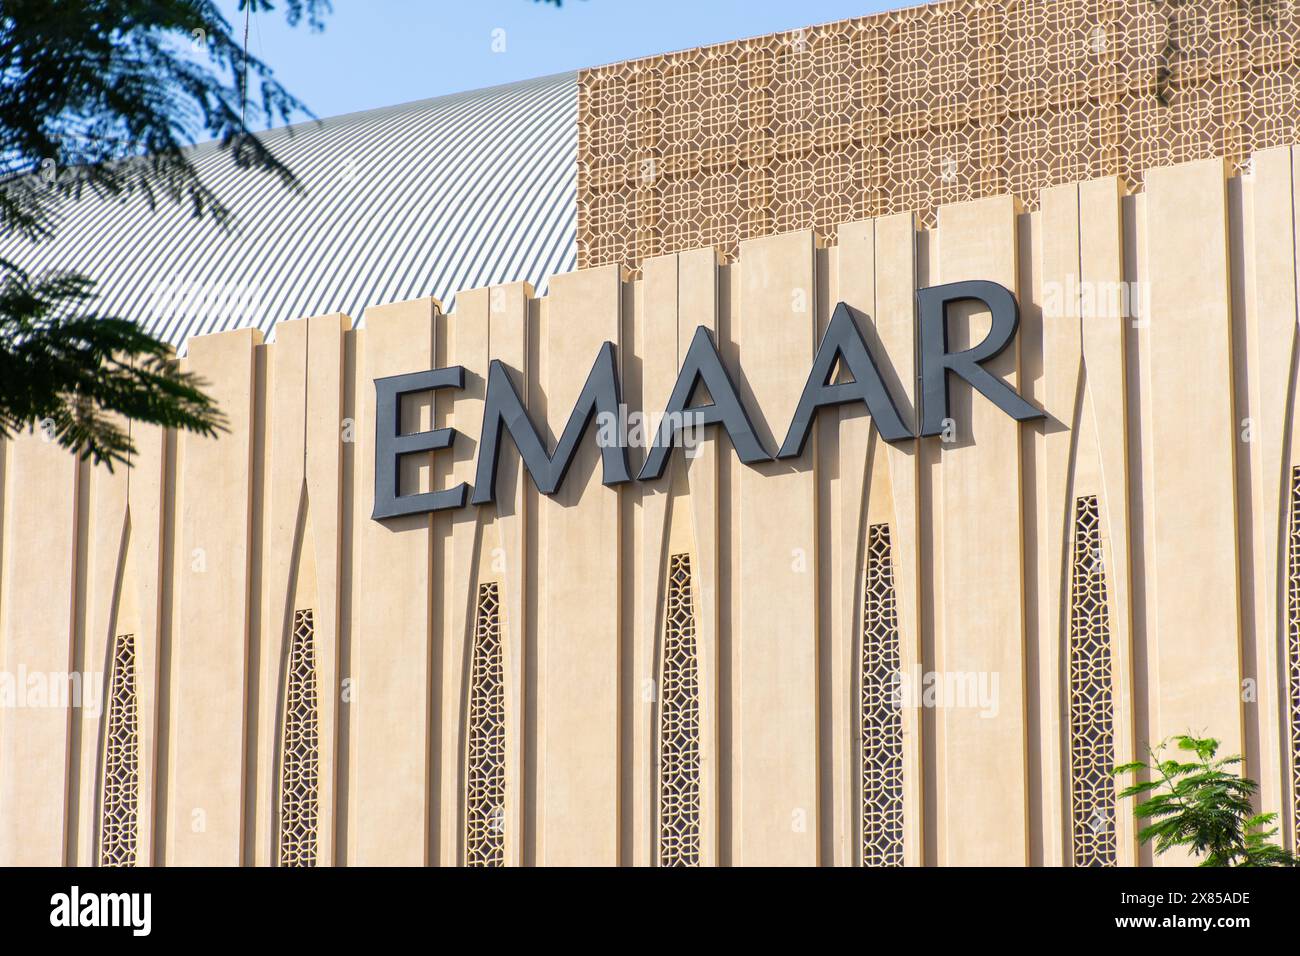 Emaar Real Estate Company Namensschild an der Wand, Dubai City, VAE. Stockfoto